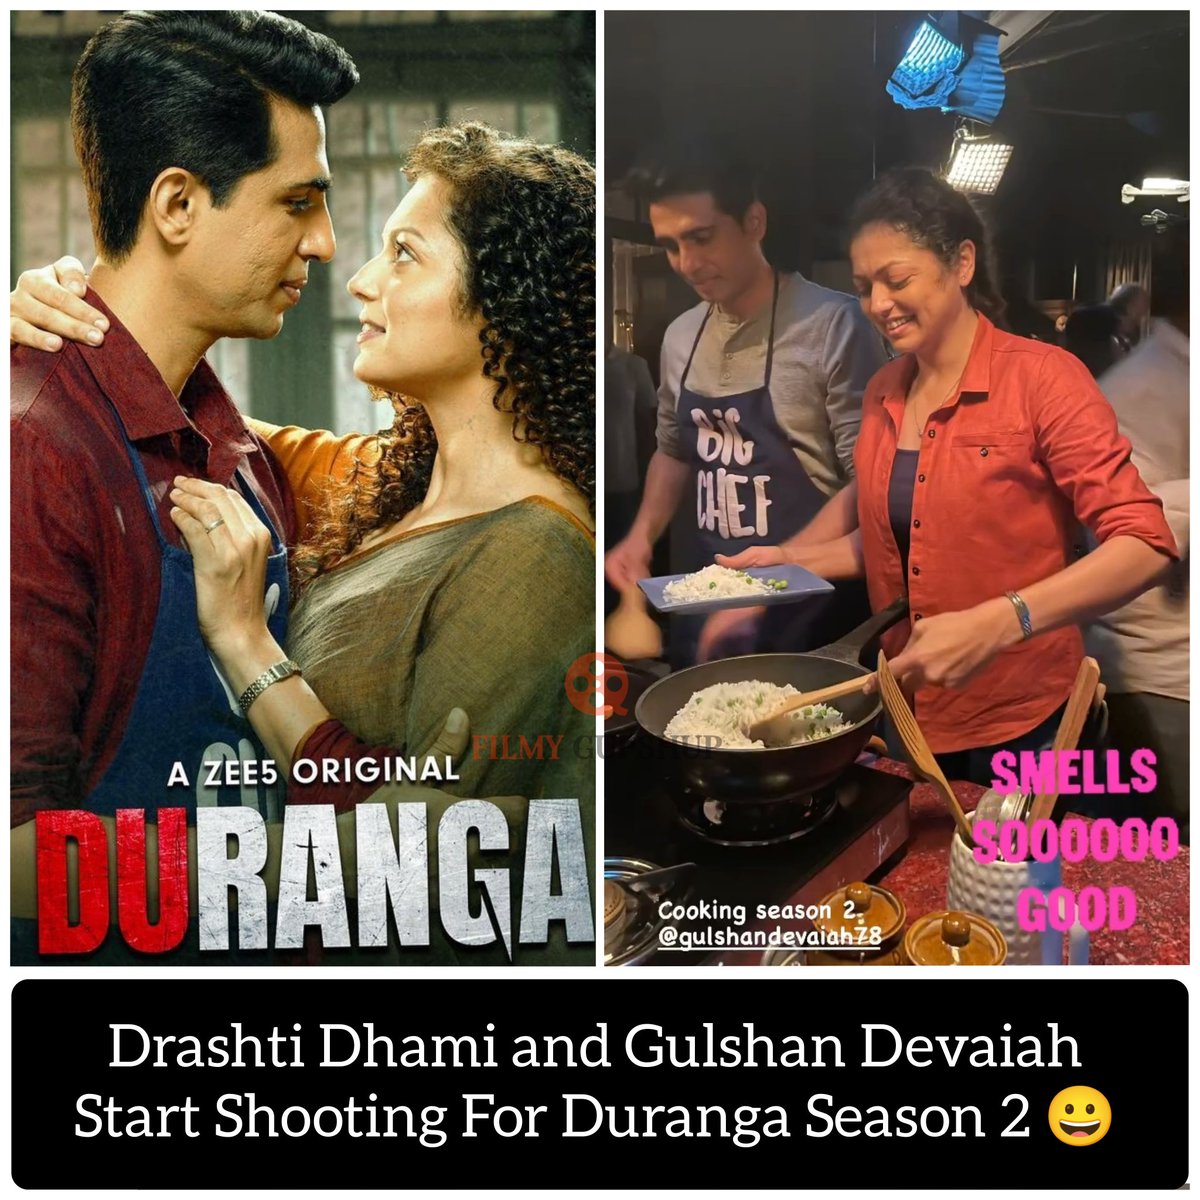 After Super Successful Season 1, Drashti Dhami and Gulshan Devaiah Start Shooting For the Season 2 of Duranga 😀

#DrashtiDhami #GulshanDevaiah #AmitSadh #Duranga2OnZee5 #DurangaS2 #Duranga2 #Duranga